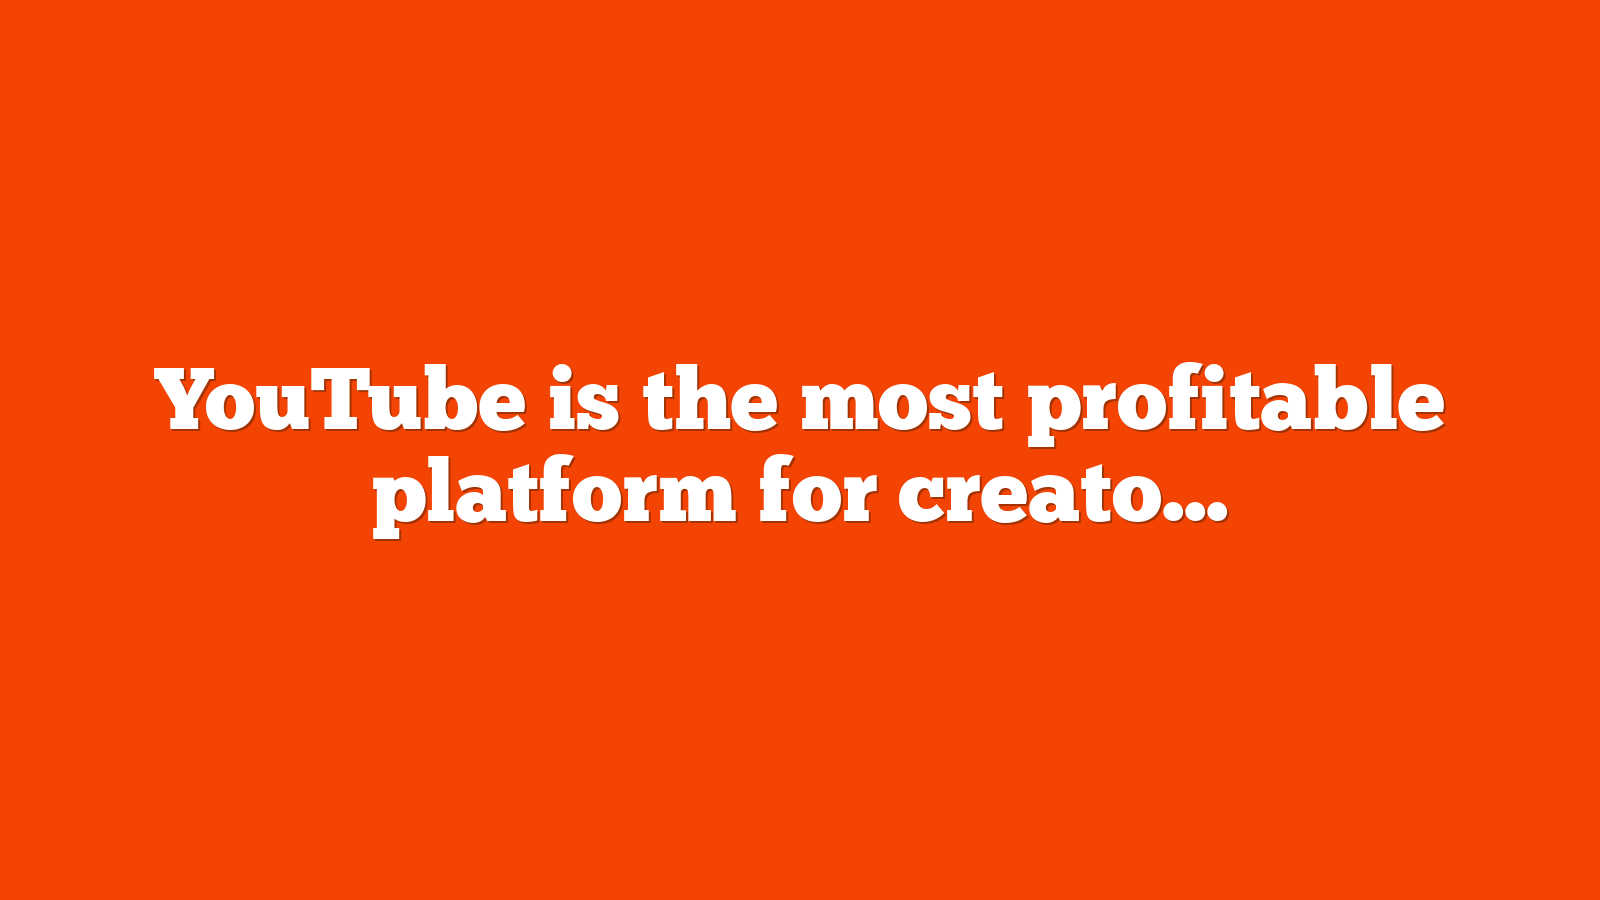 YouTube is the most profitable platform for creators survey shows